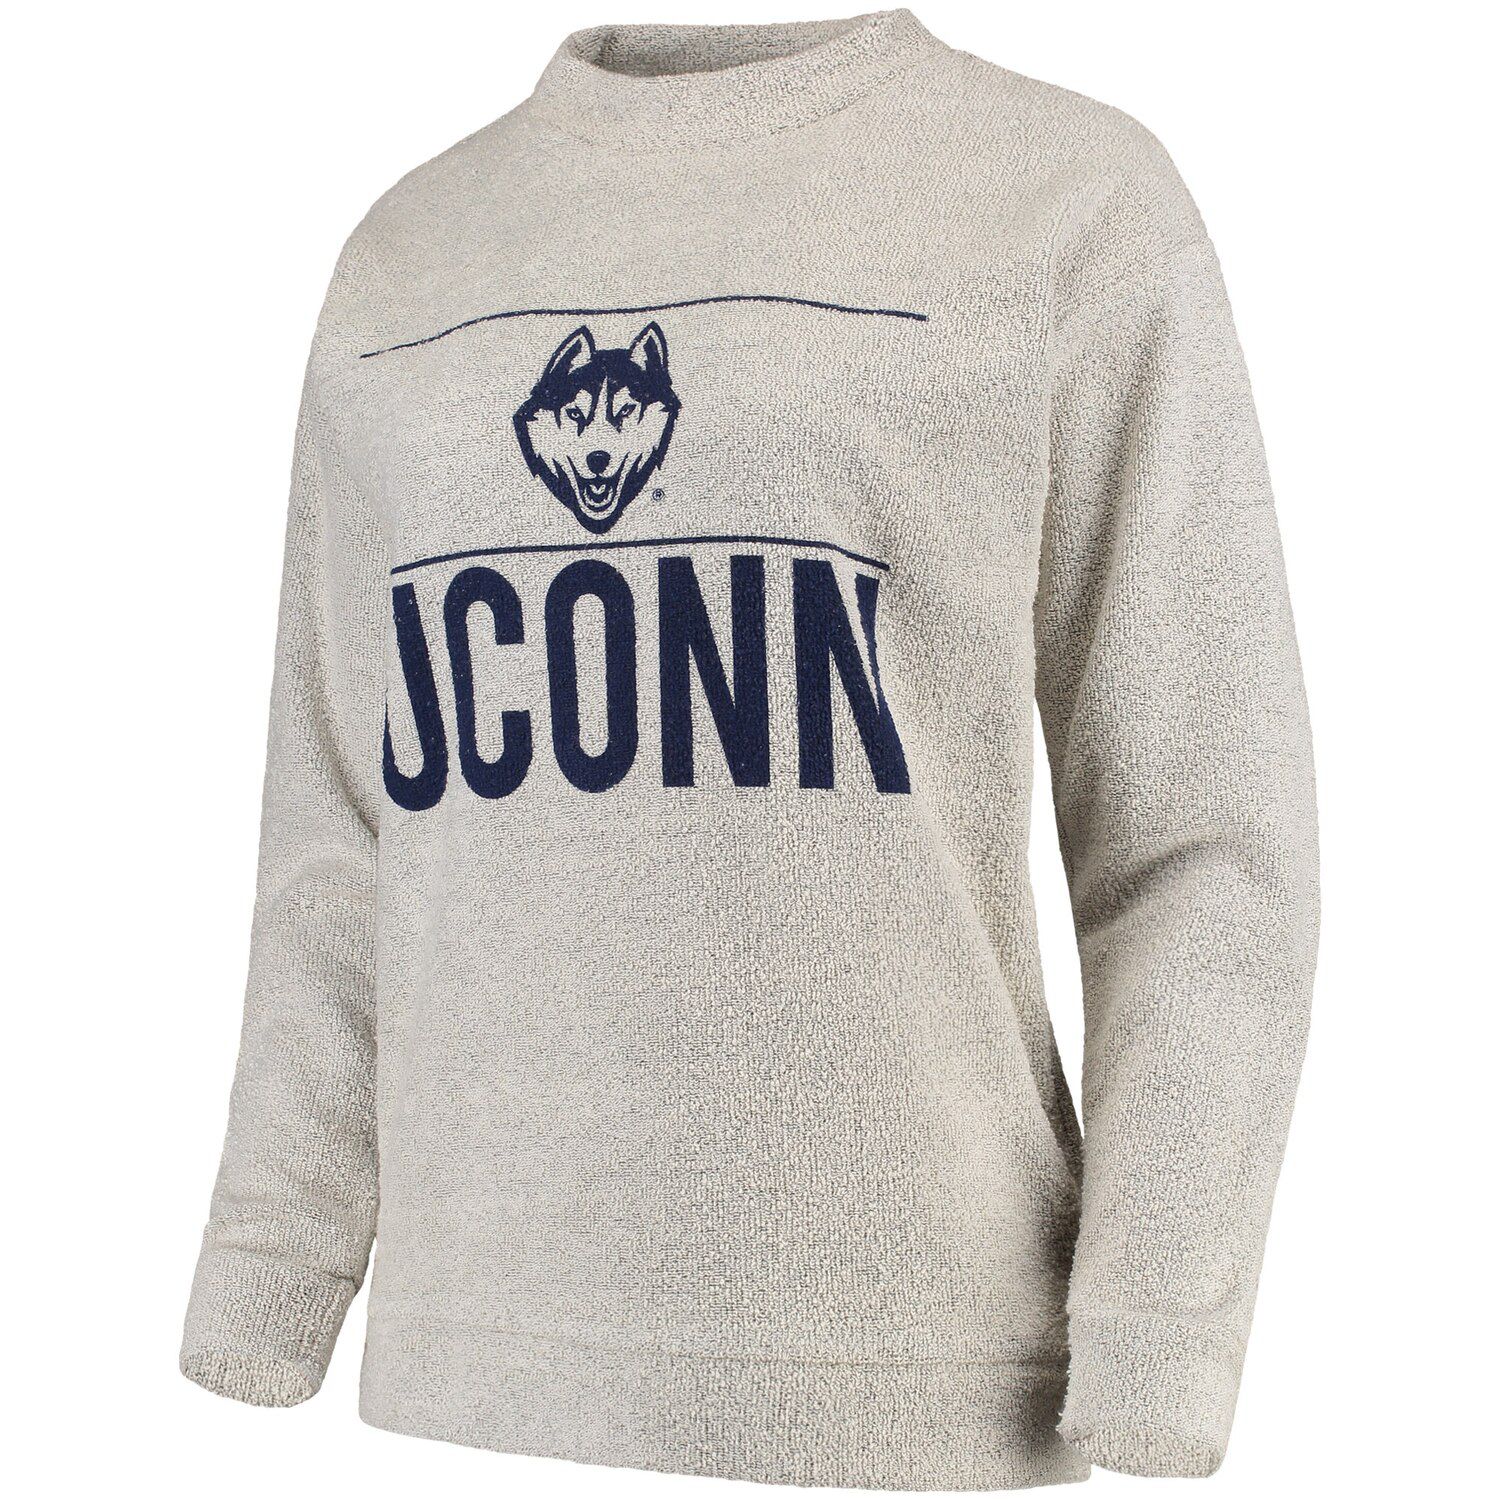 uconn women's sweatshirt